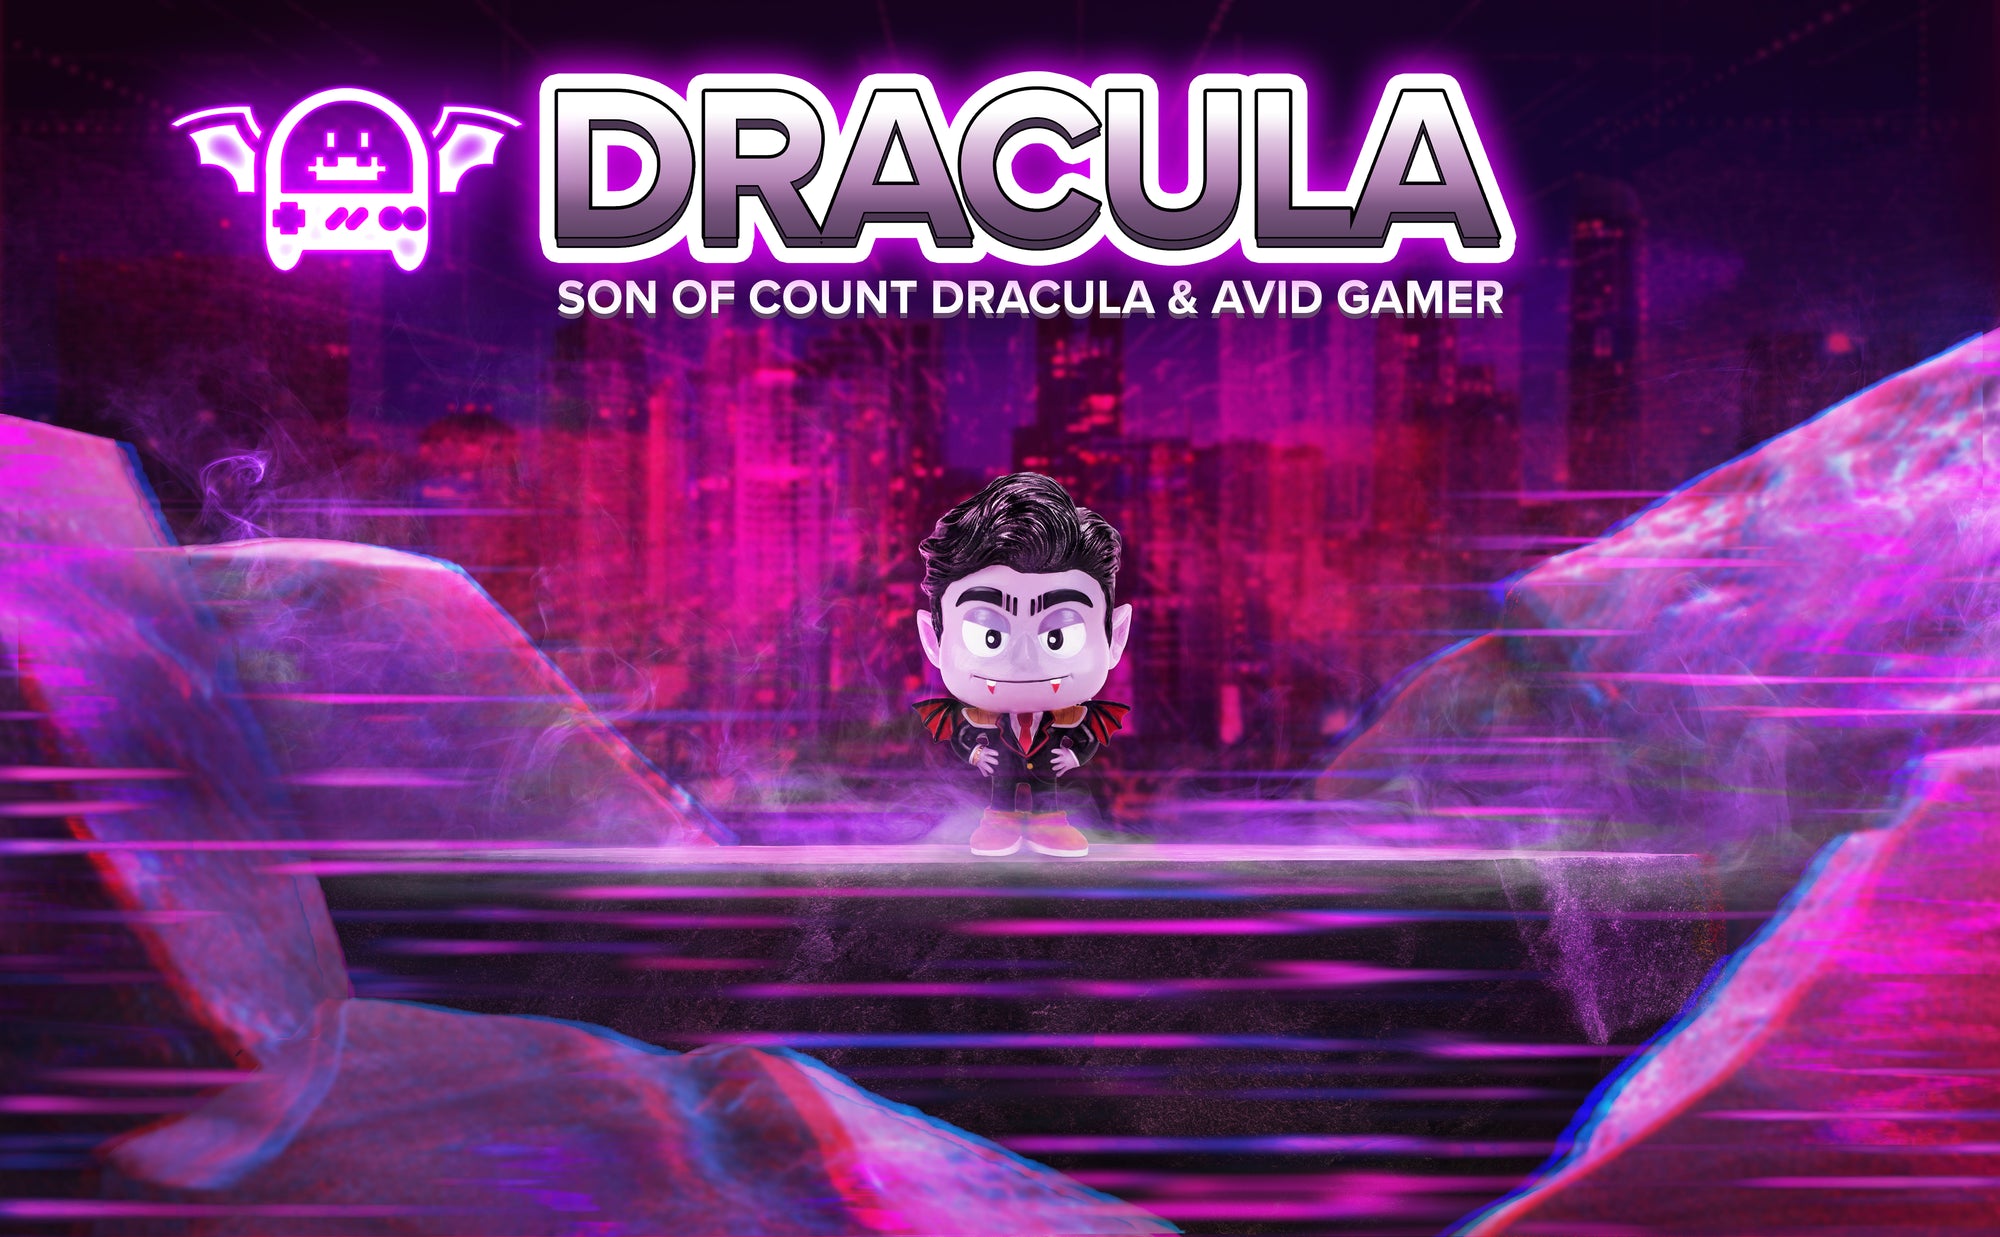 Dracula Smashcraft collectible in realistic futuristic city, Transylvania. Text "Dracula, son of Count Dracula & avid gamer" and Dracula Jr's gamer logo